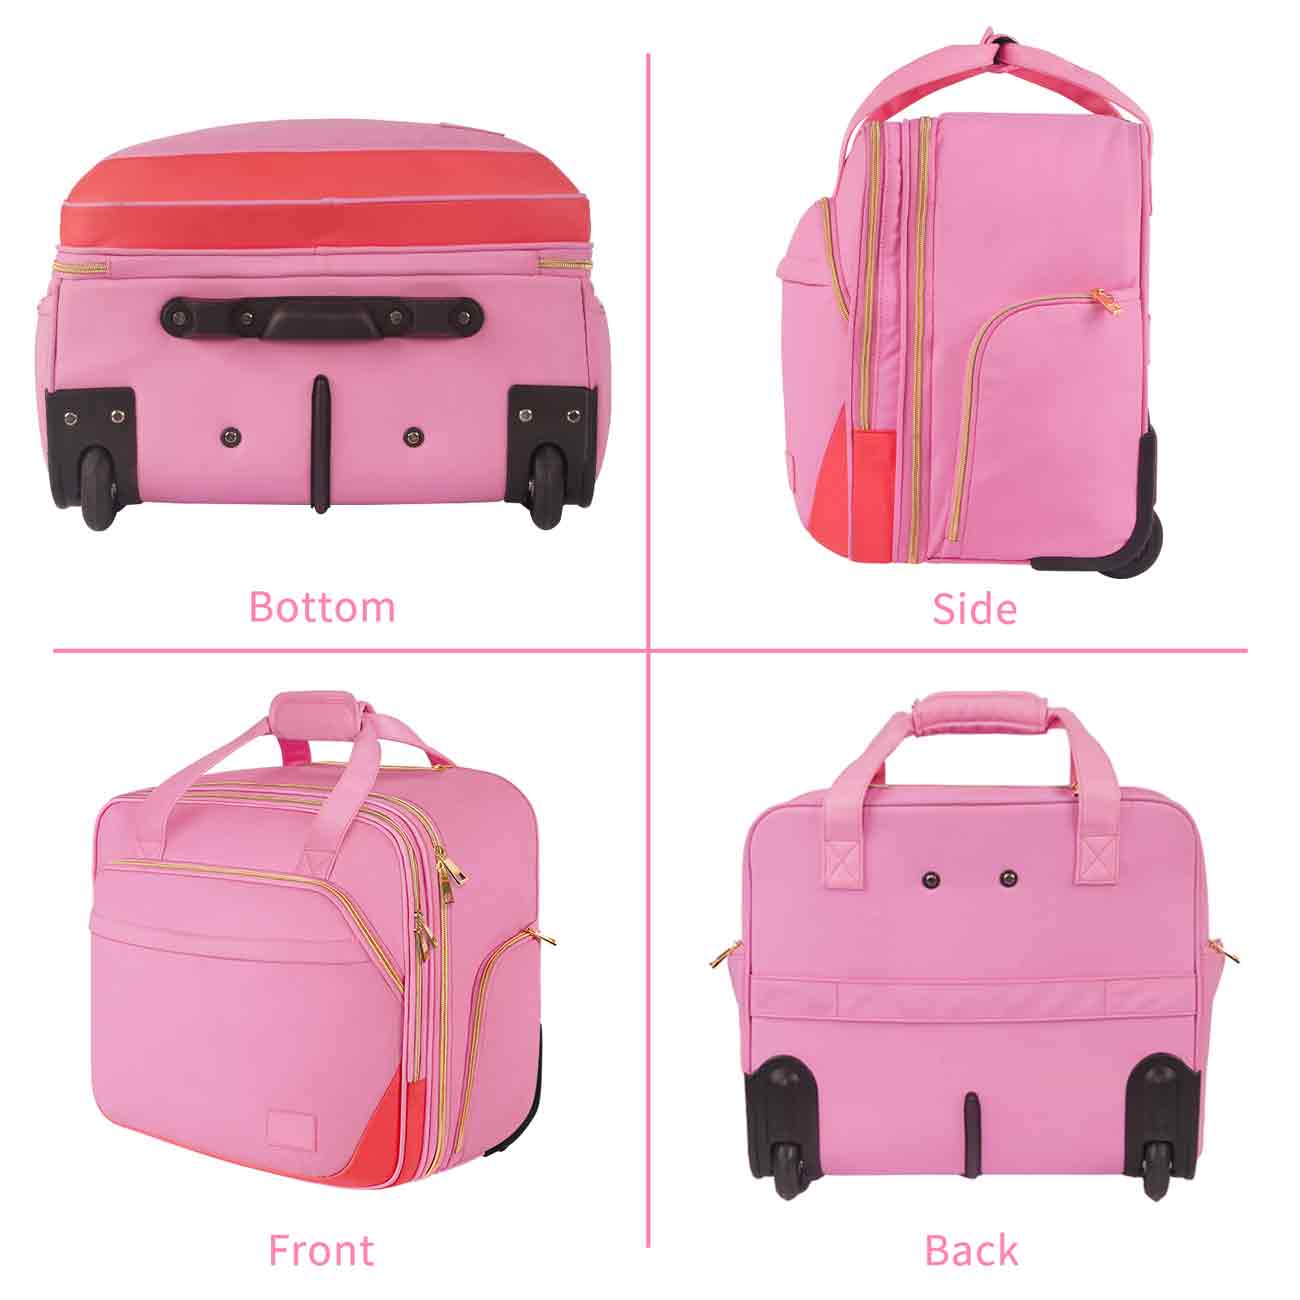 Matein 15.6" Laptop Bag Cute Pink/Black & White Striped Padded  RFID Bow Lightwei